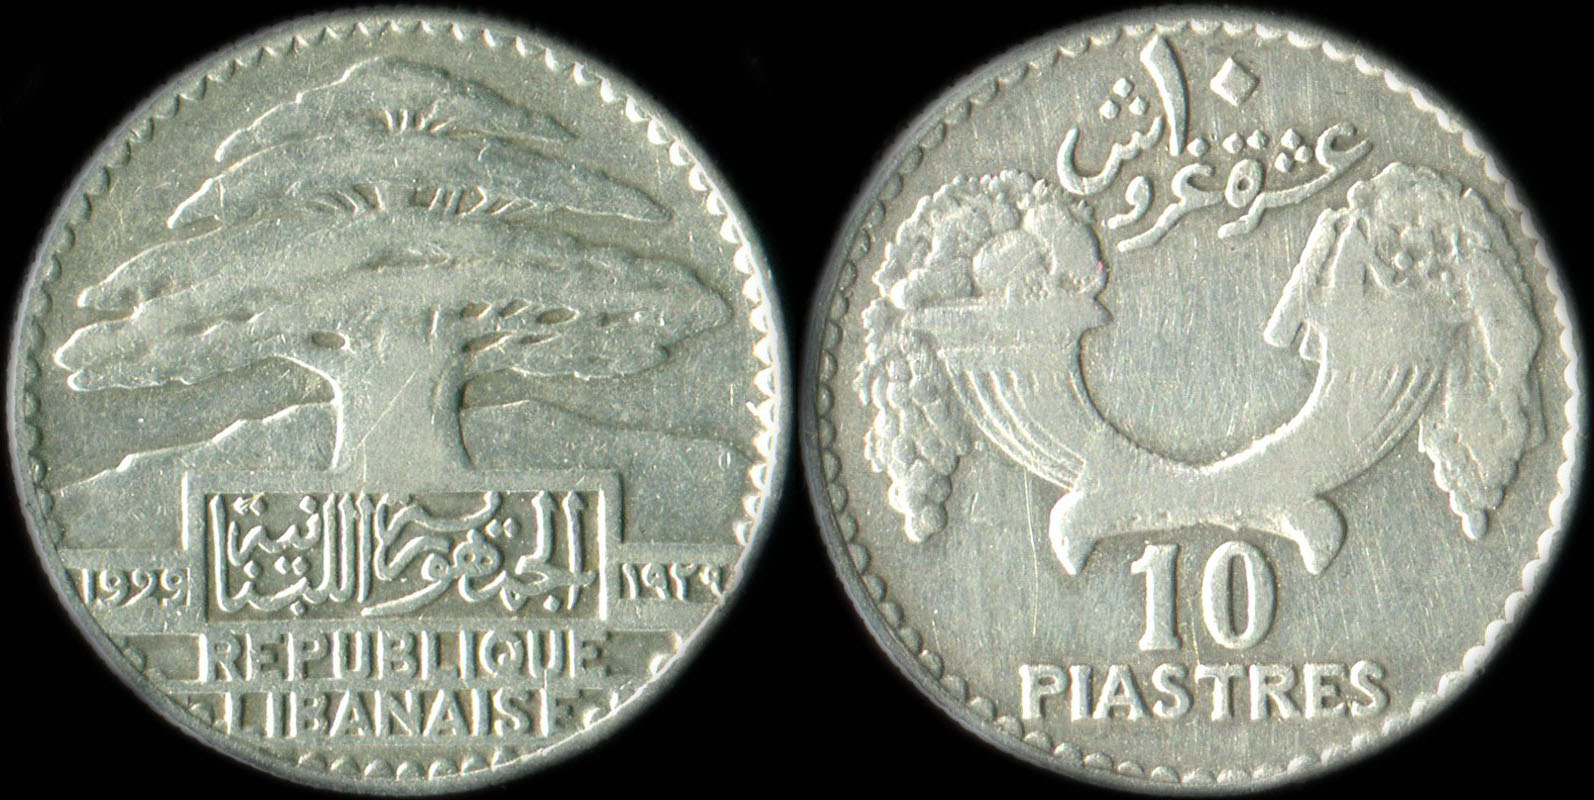 Pice de 10 piastres 1929 - Rpublique Libanaise